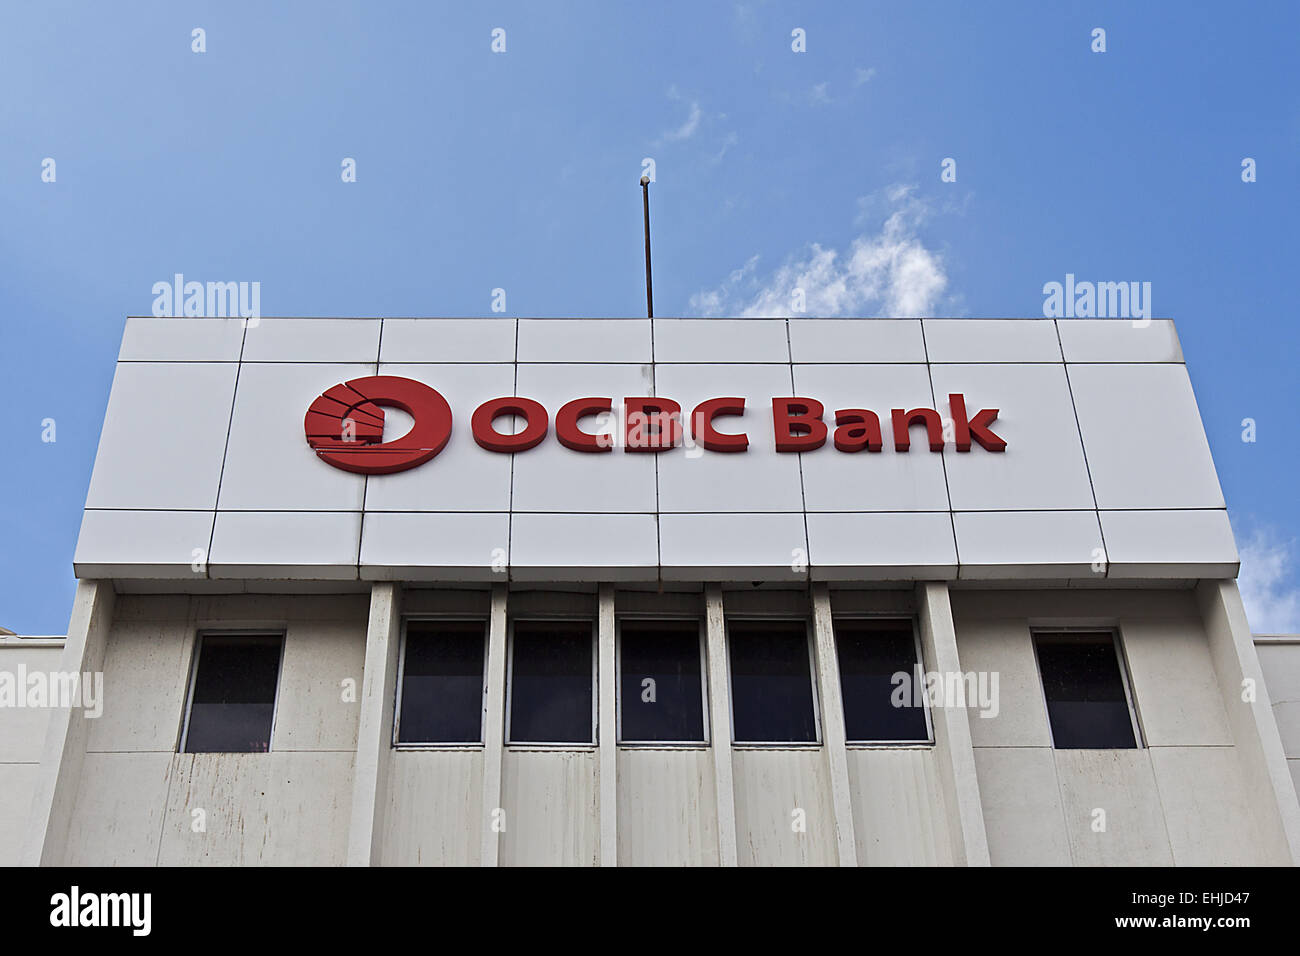 OCBC Bank Foto Stock